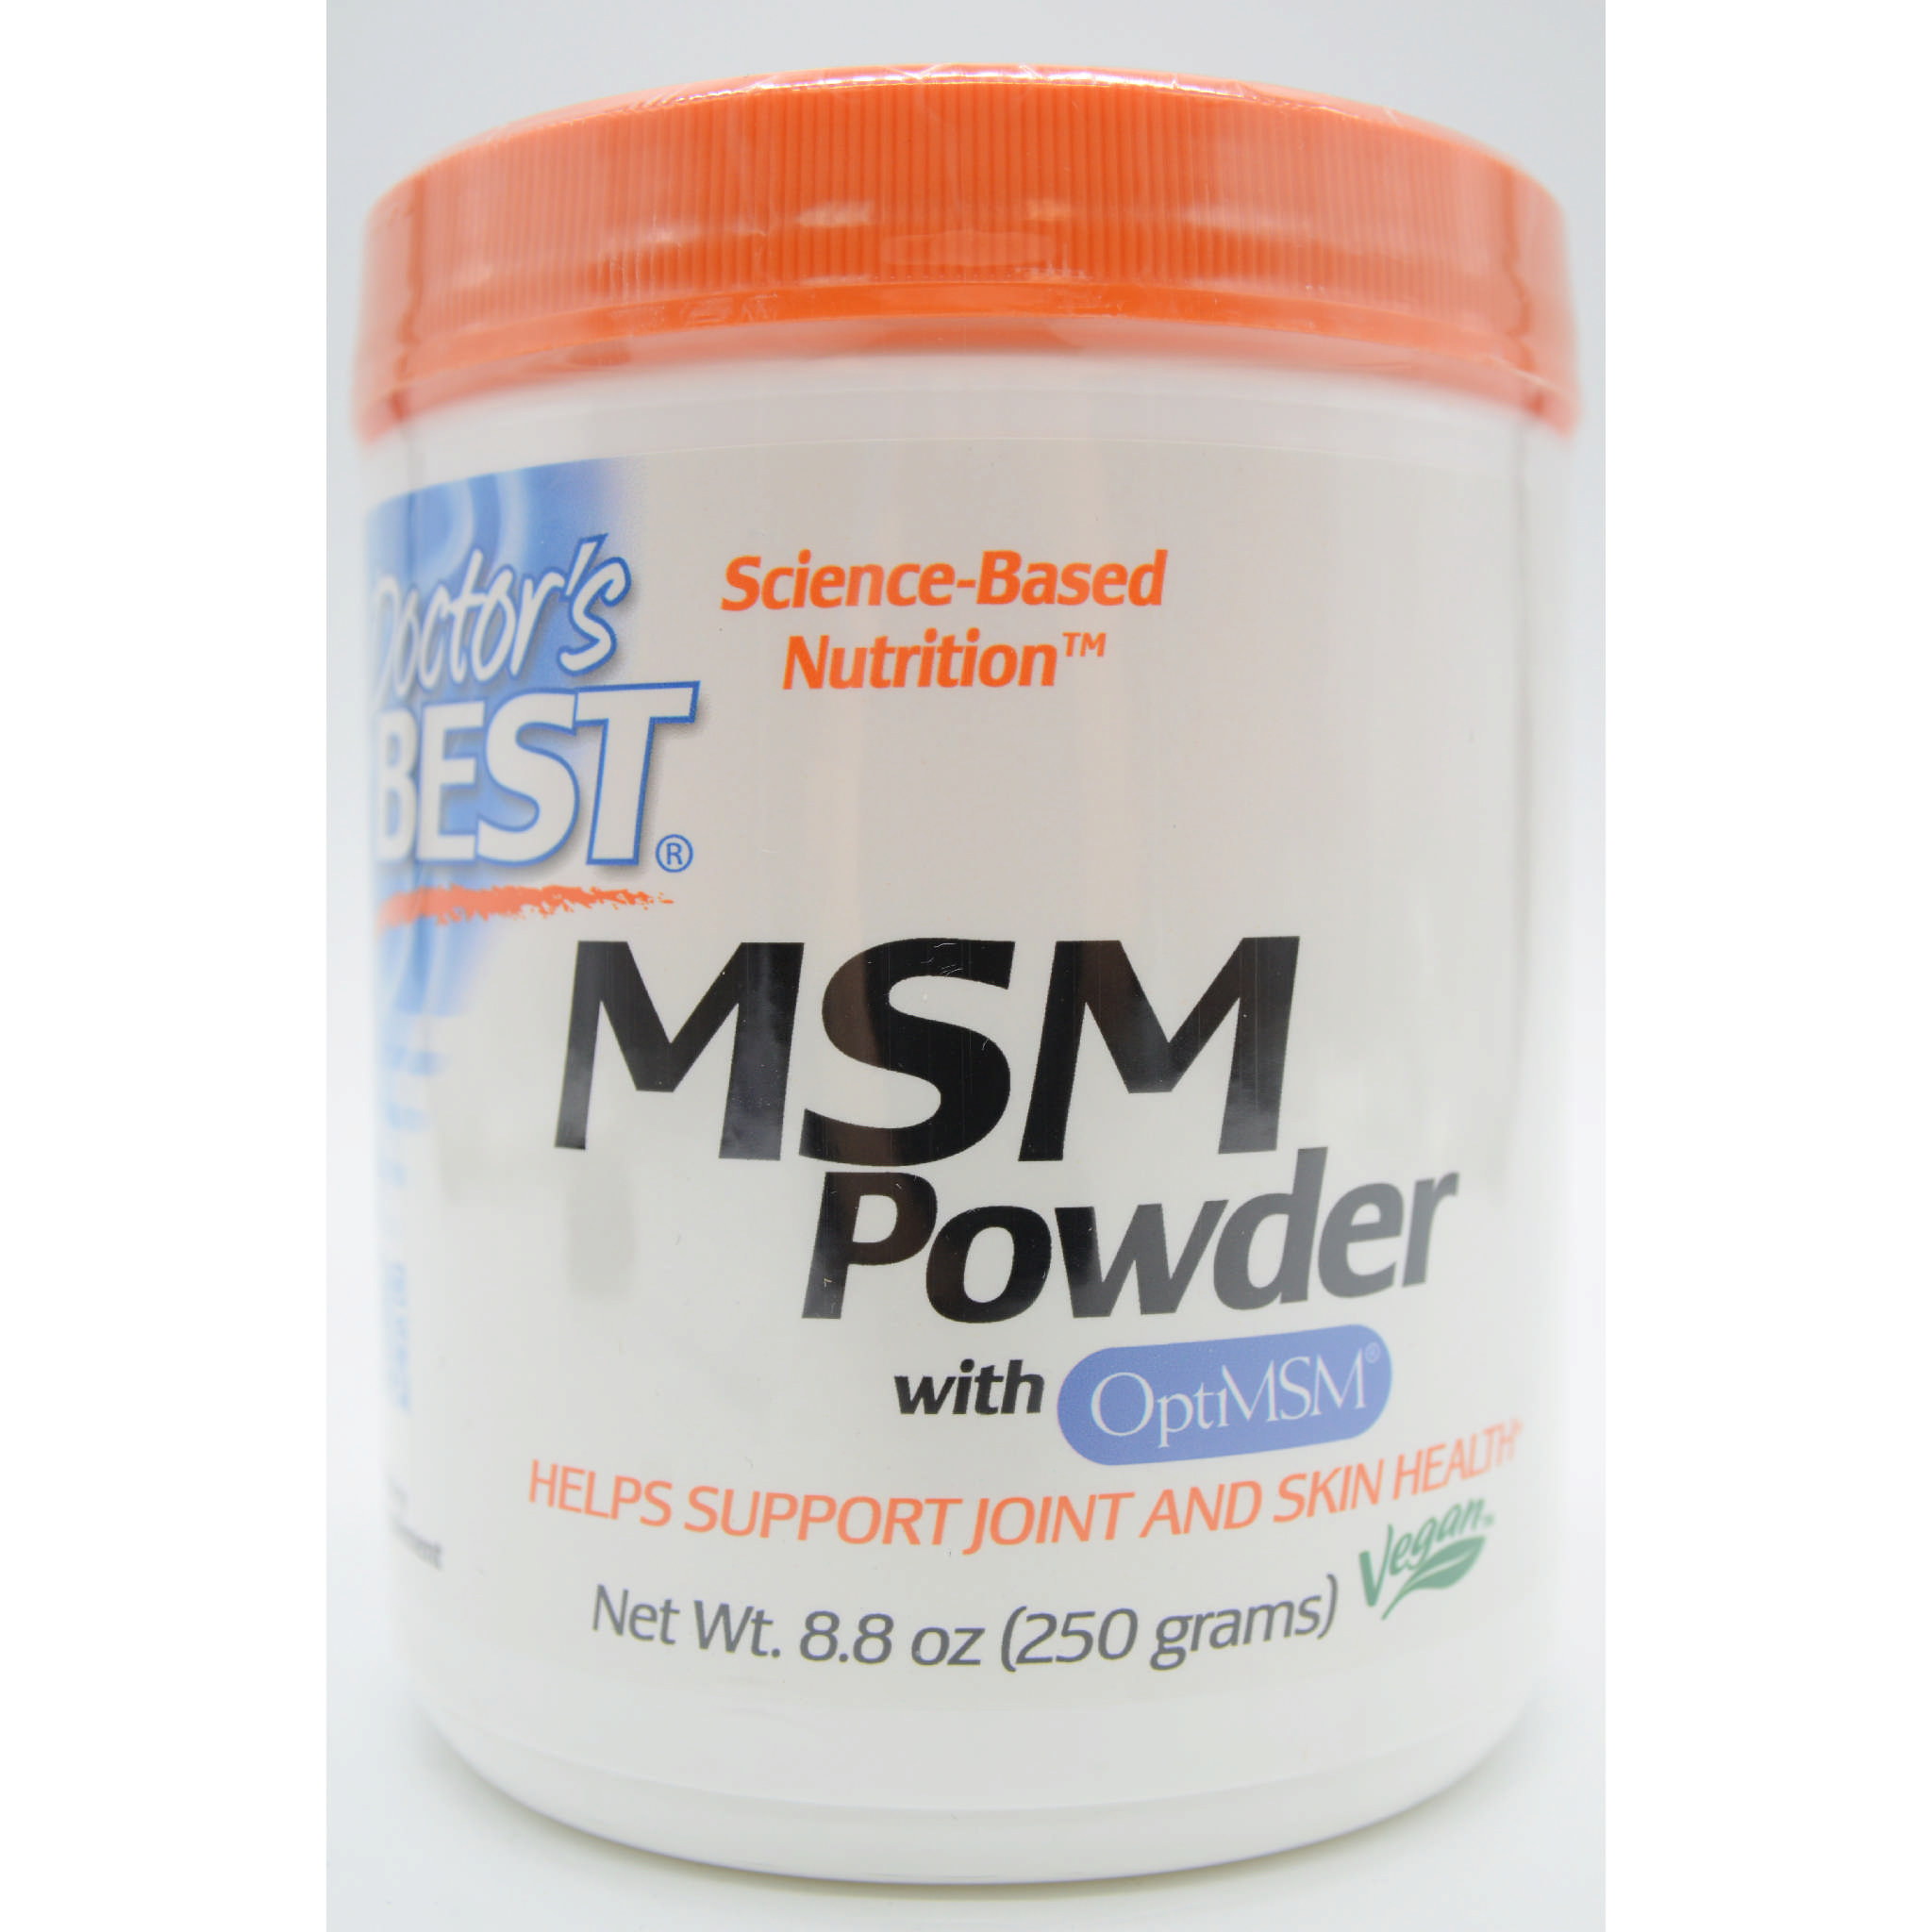 Doctors Best - Msm Best powder 250 Gms